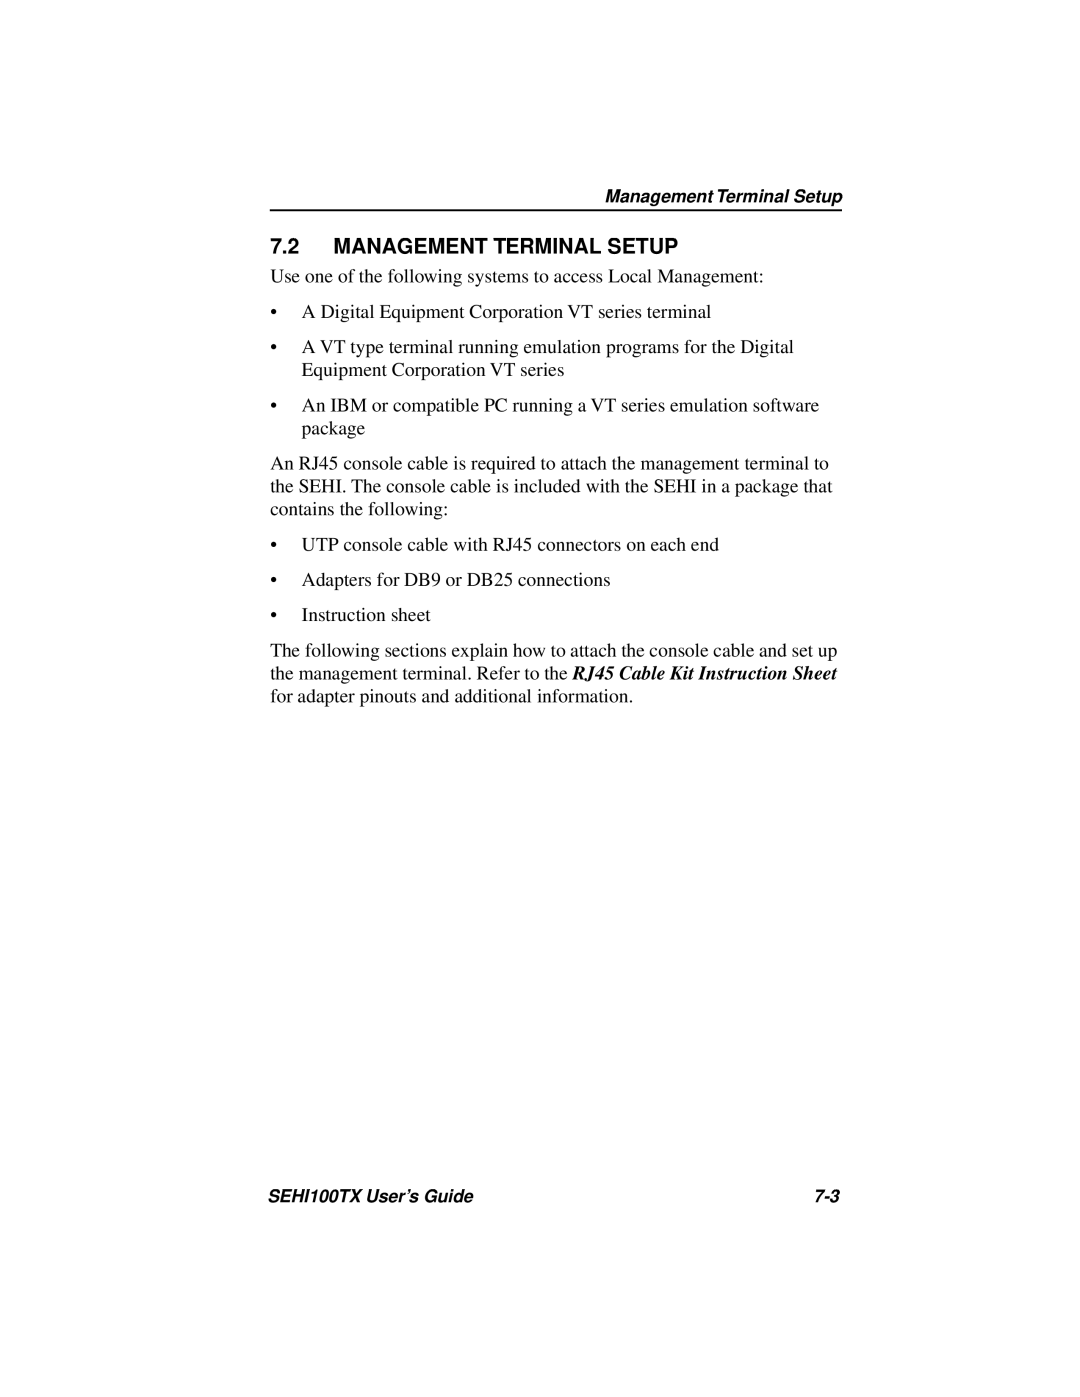 Cabletron Systems SEHI100TX-22 manual Management Terminal Setup 